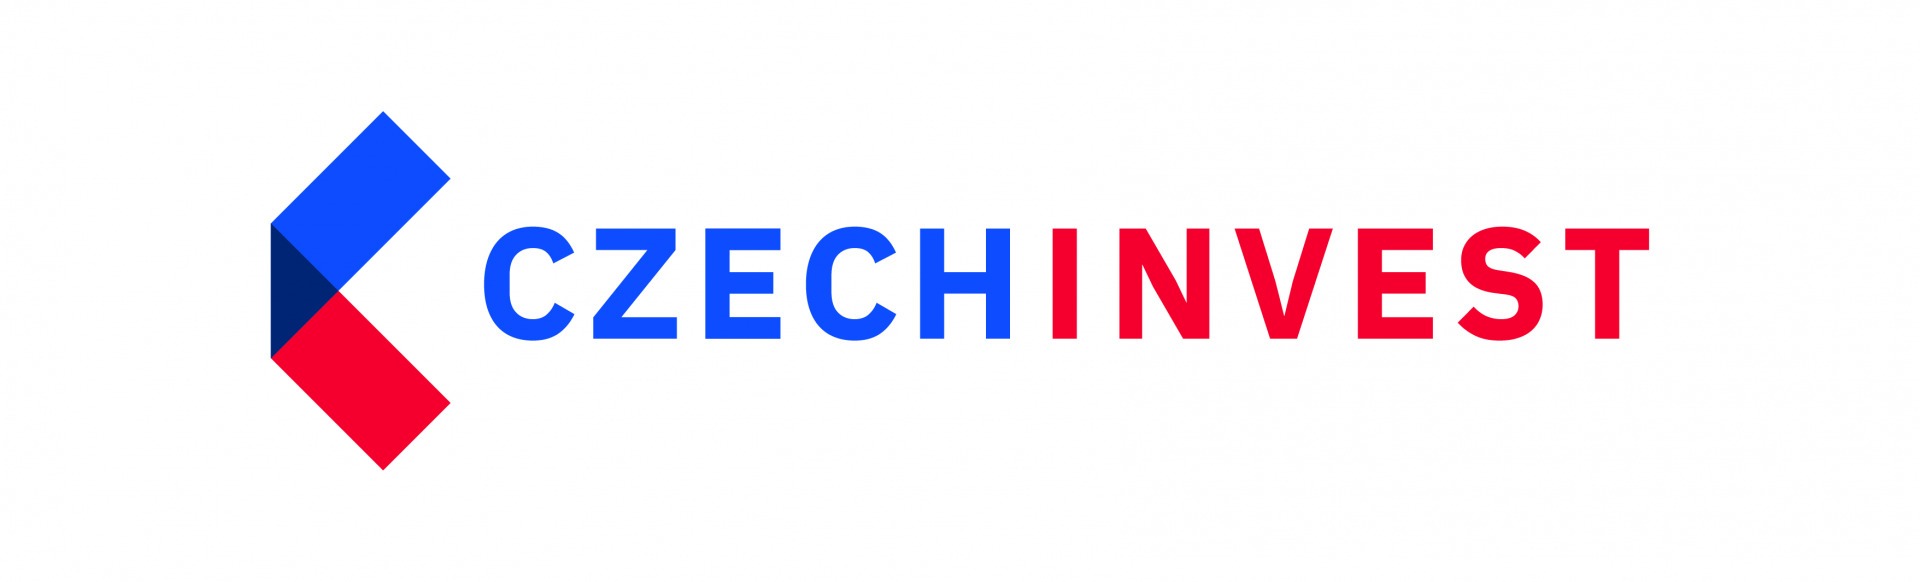 czechinvest logo safe zones 01 positive